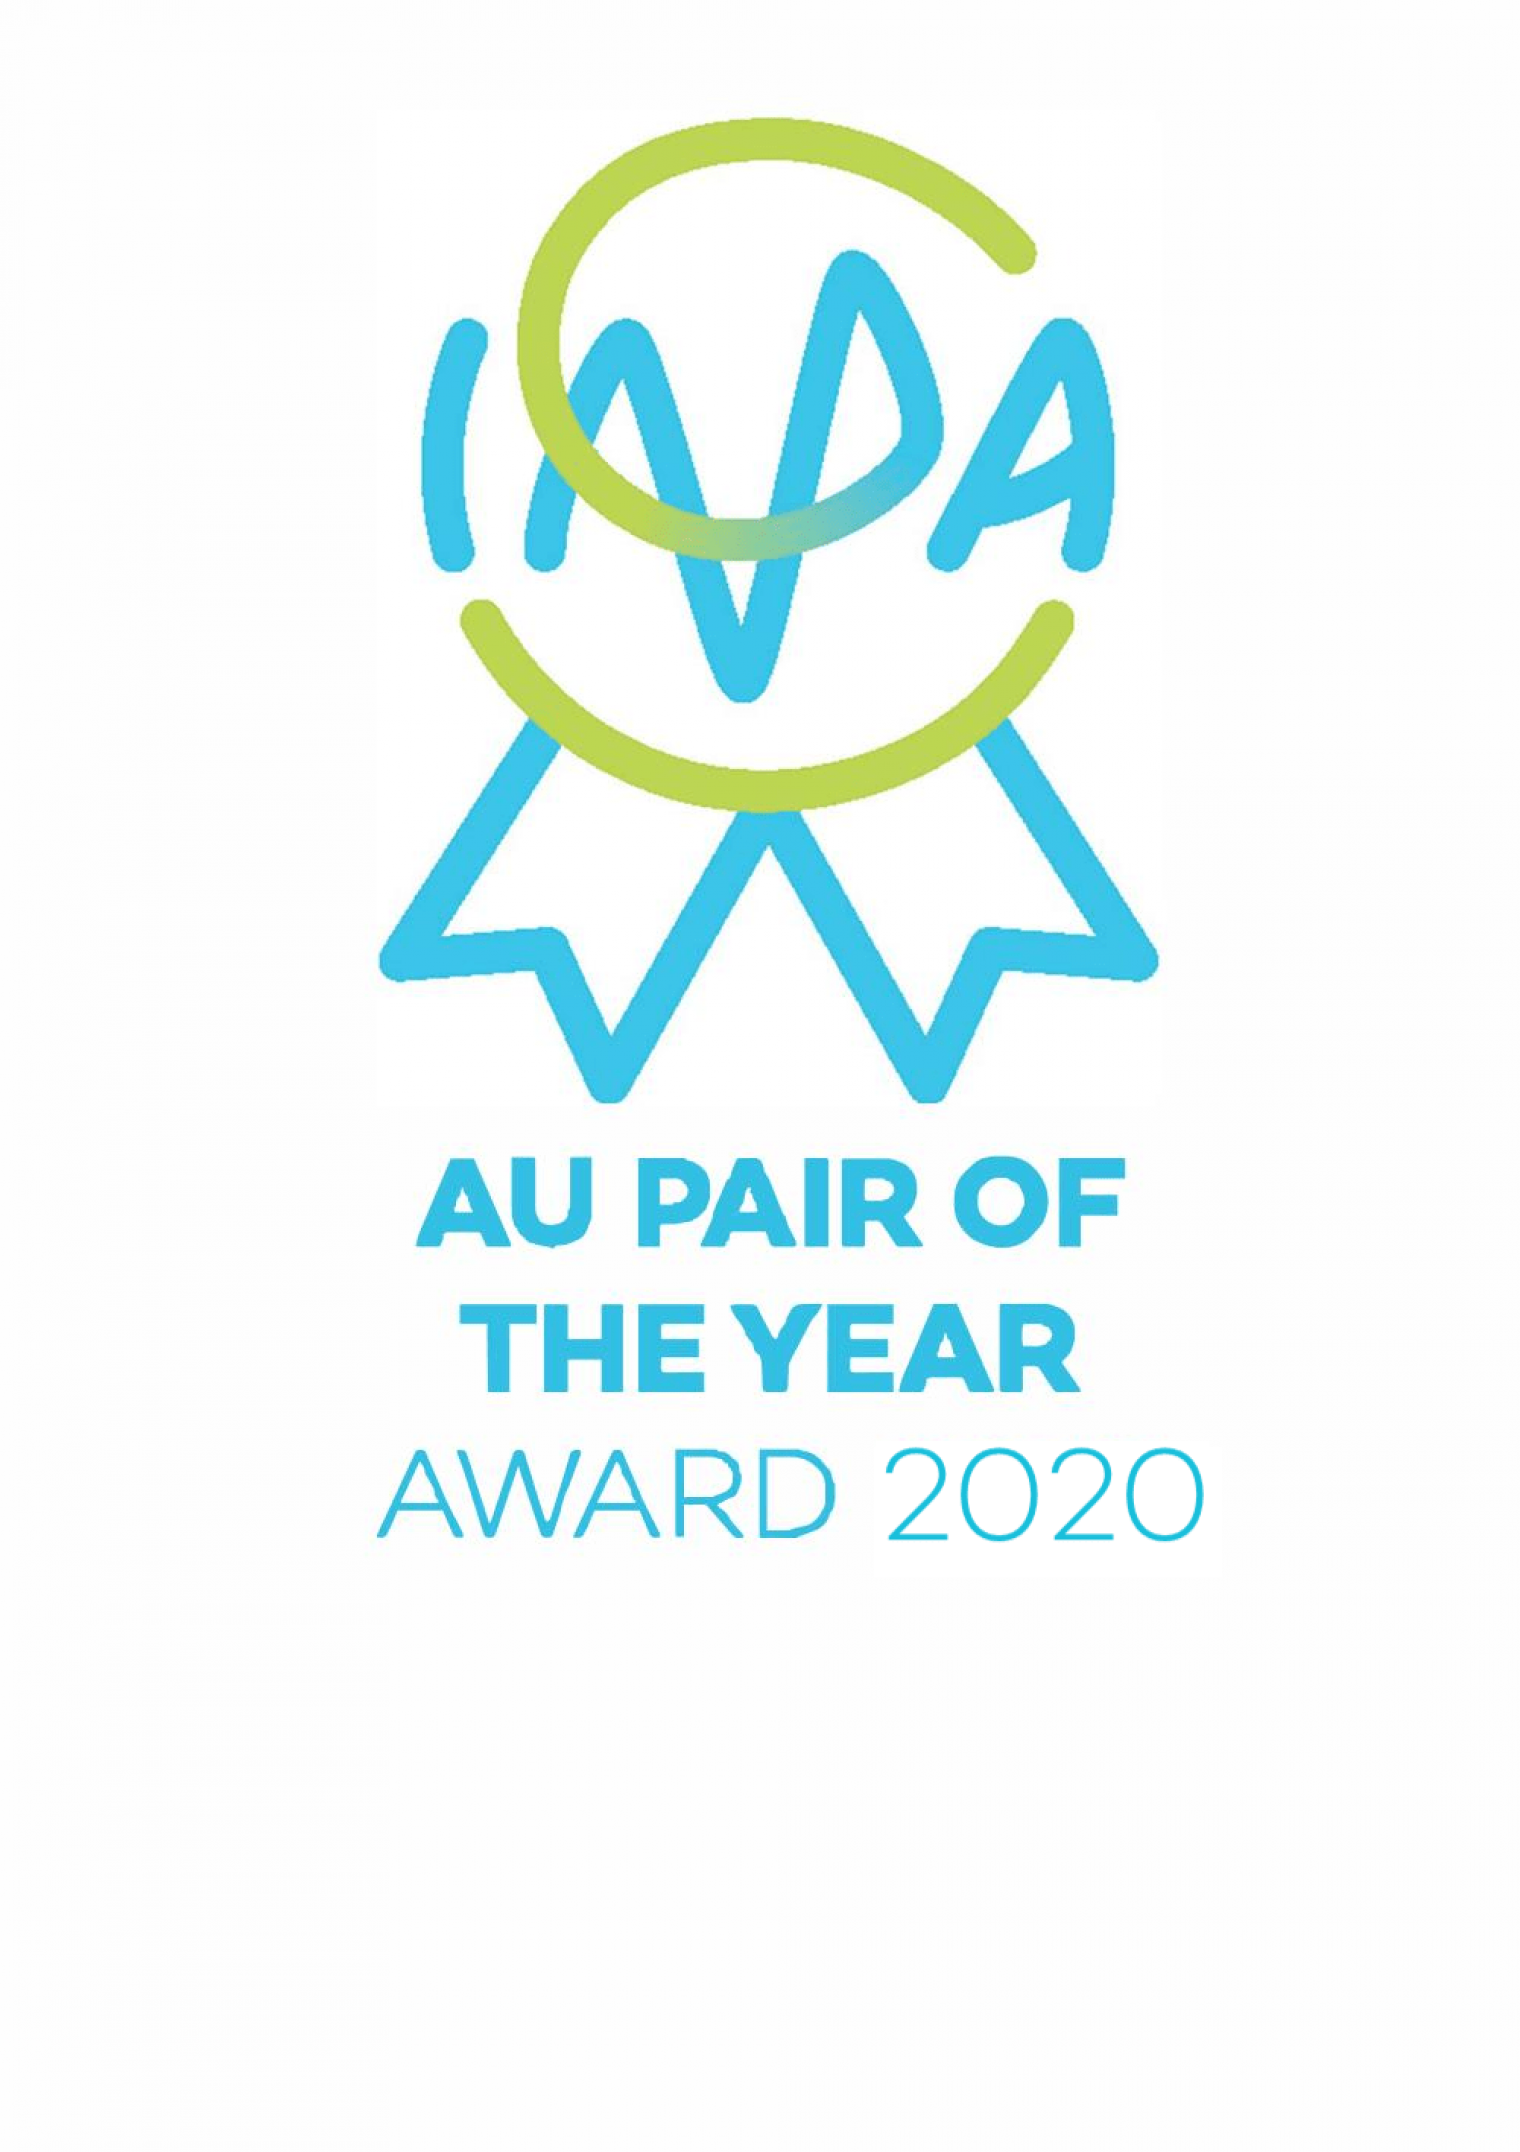 IAPA 2020 Au Pair of the Year Award: Meet the finalists